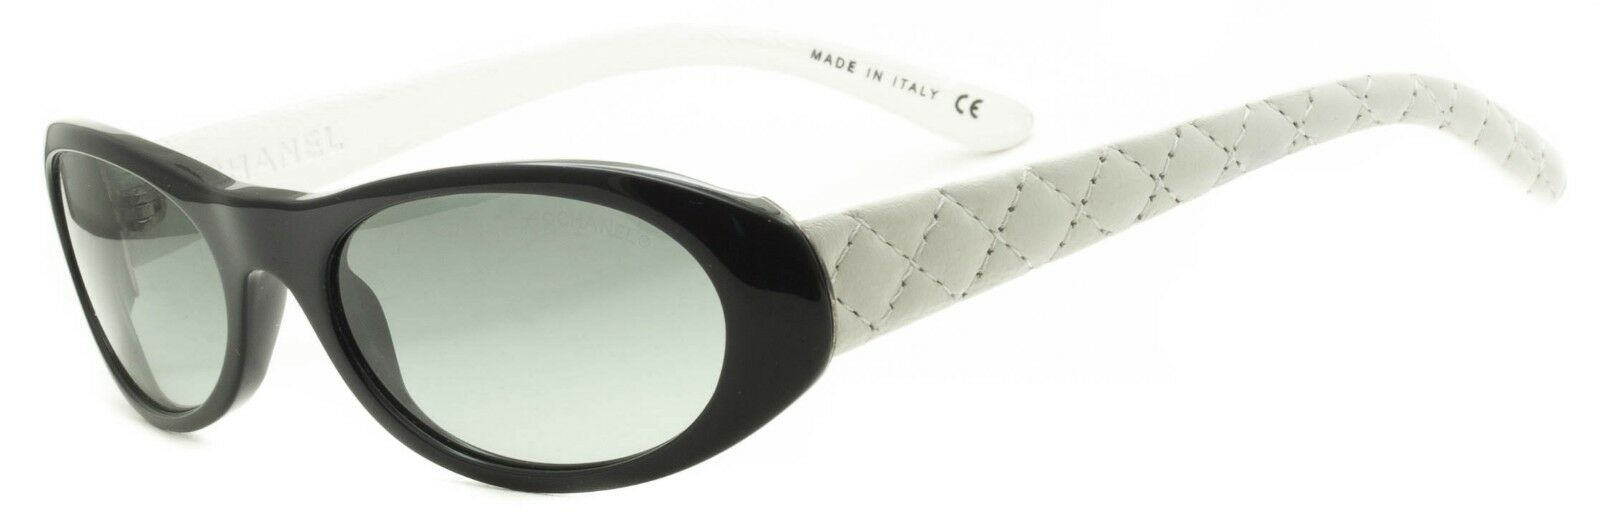 CHANEL 5129-Q c.1029/11 Sunglasses Shades New FRAMES Eyeglasses Glasses -  ITALY - GGV Eyewear